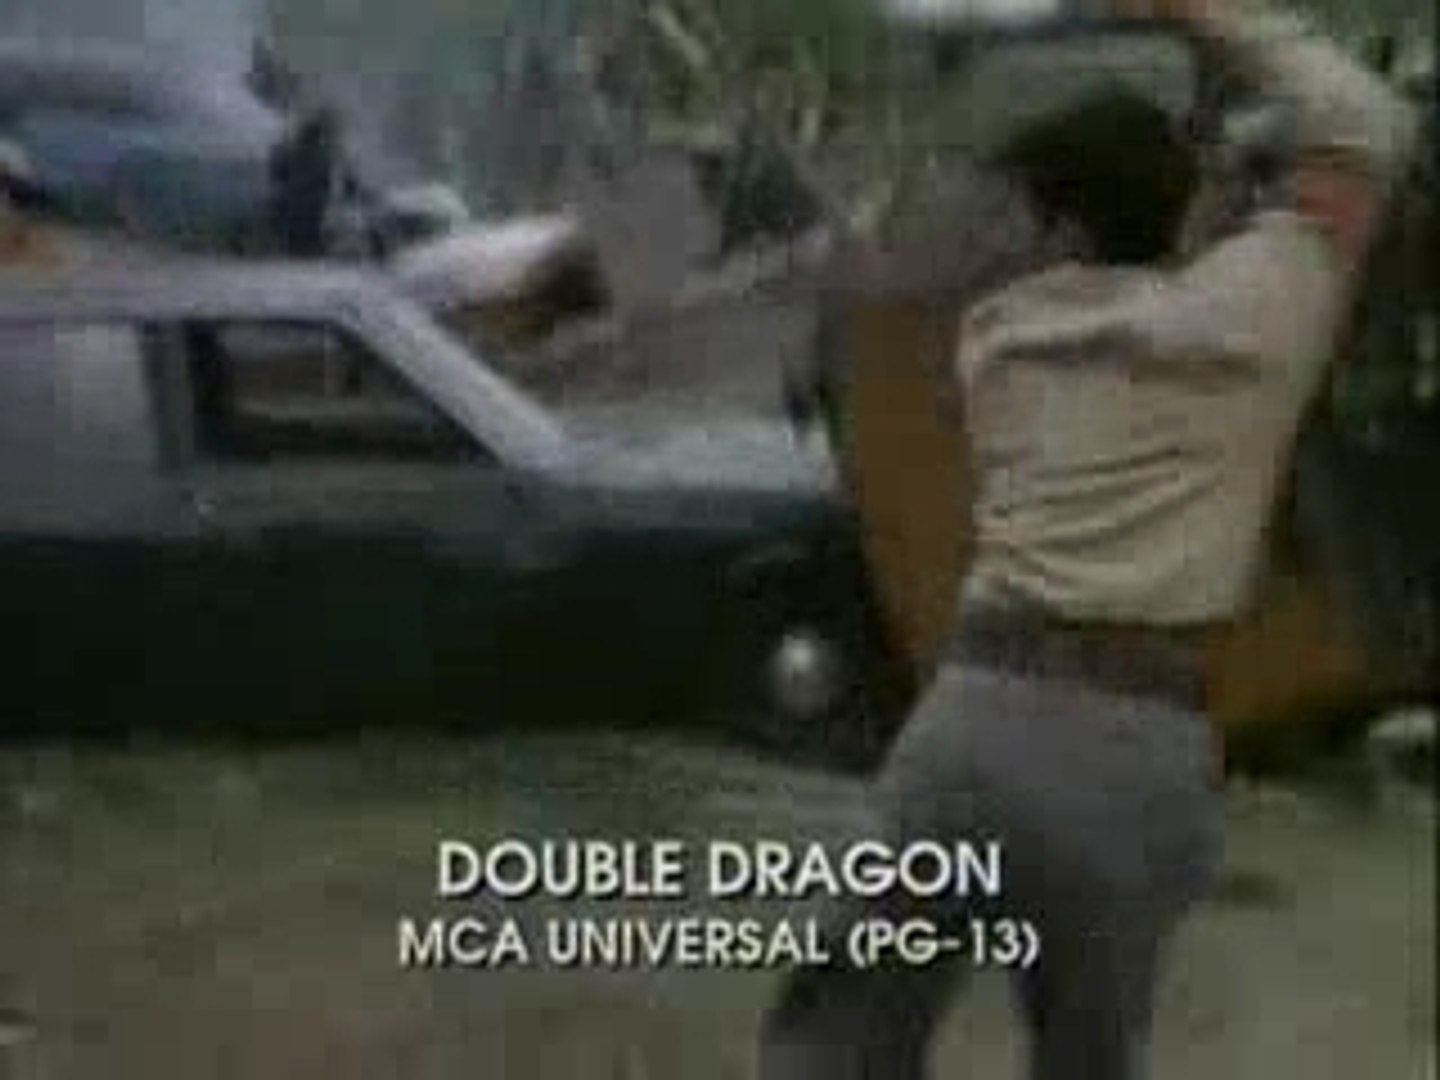 Double Dragon 1994 Trailer HD, Robert Patrick